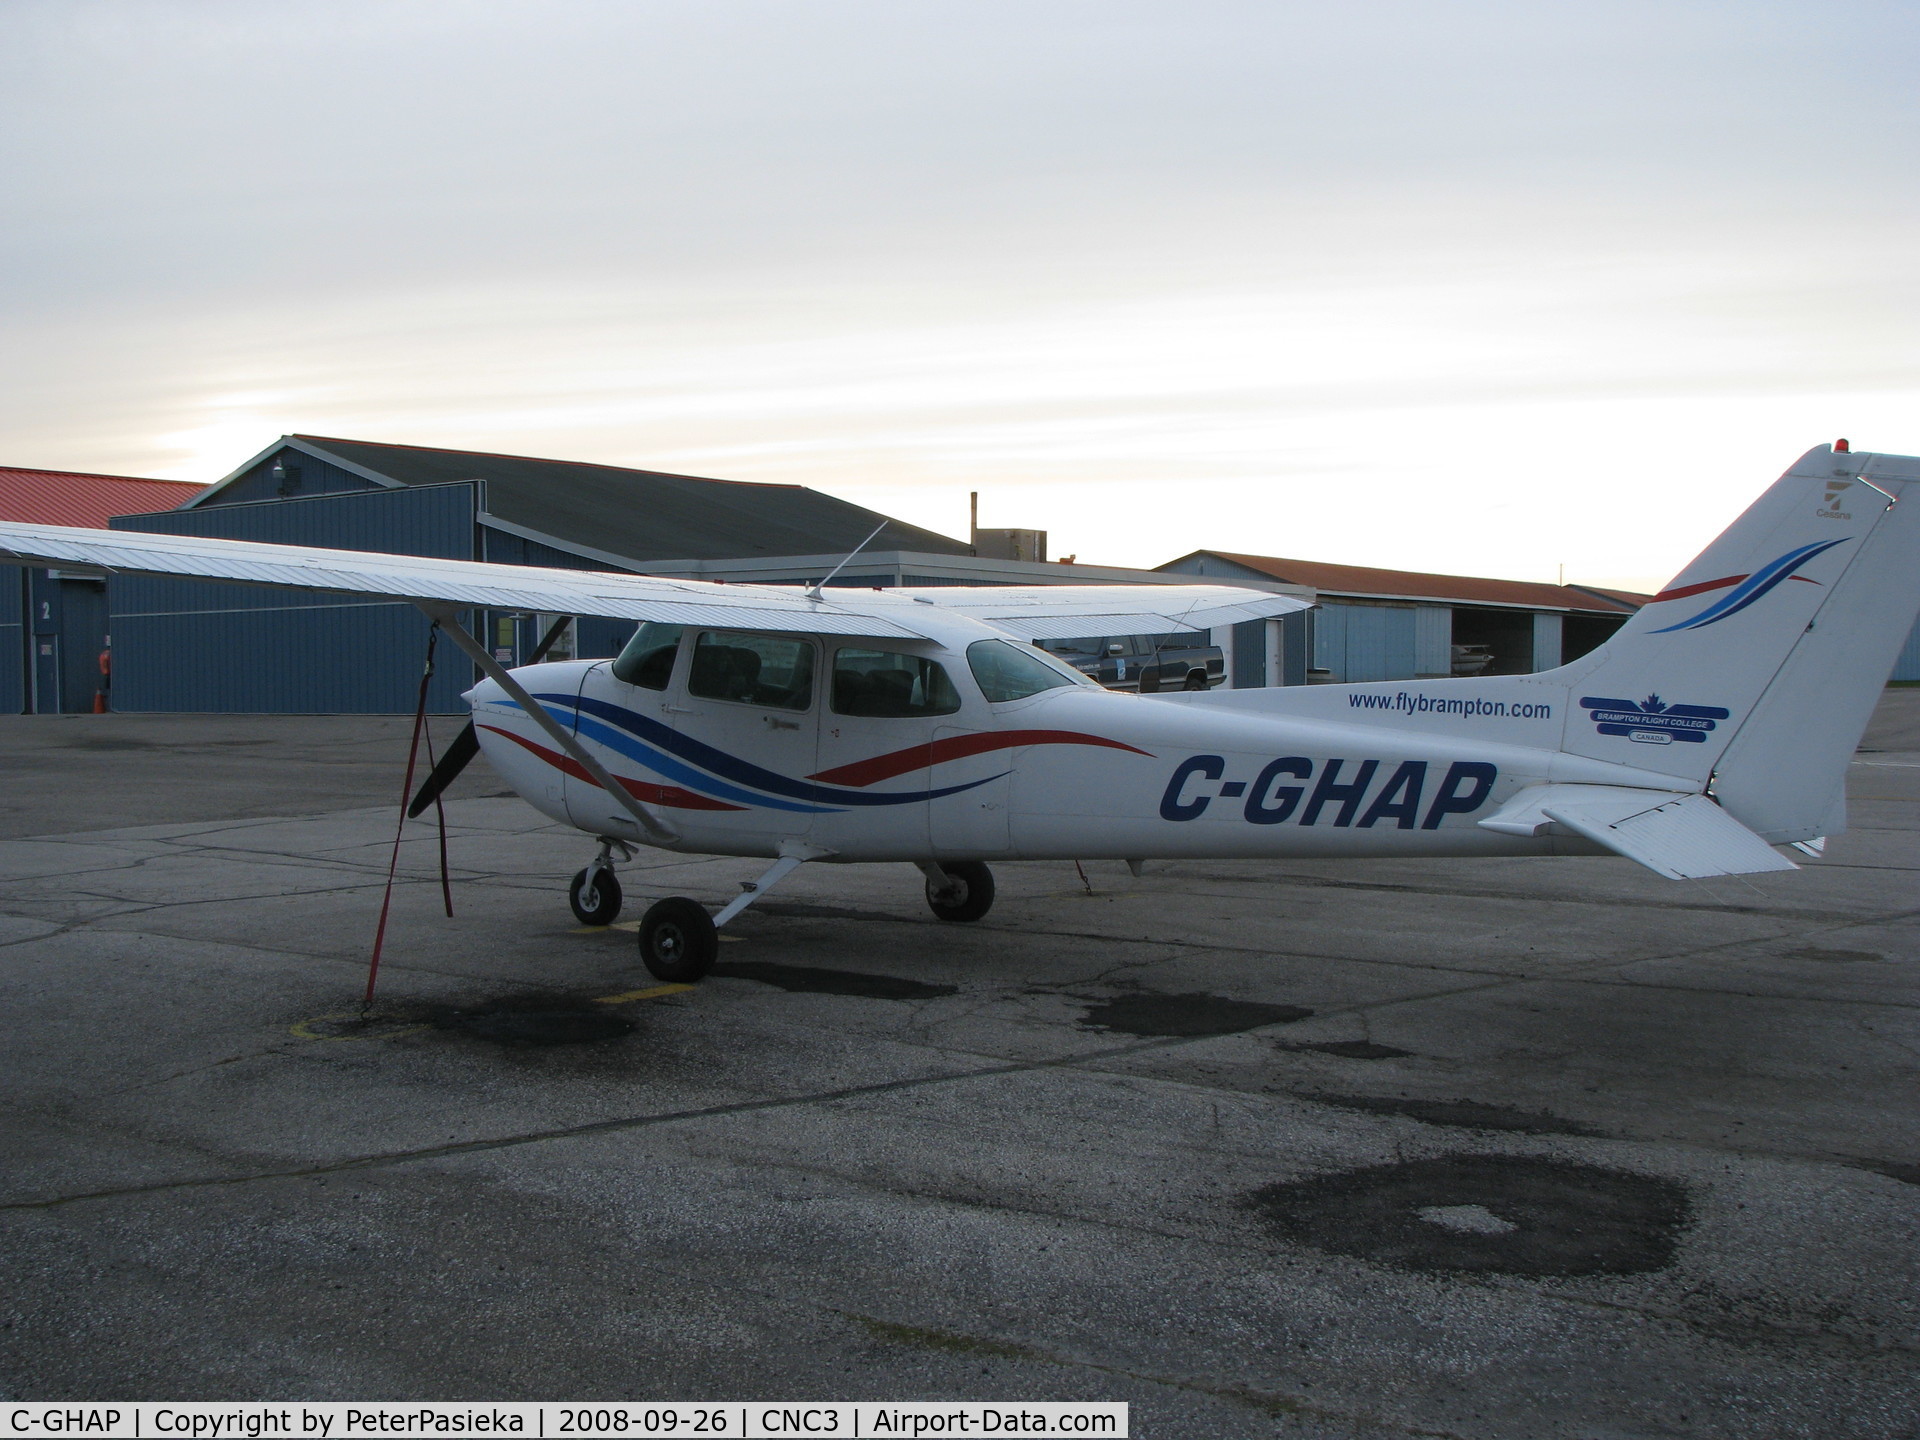 C-GHAP, 1983 Cessna 172P C/N 17276135, @ Brampton Airport, BFC training aircraft